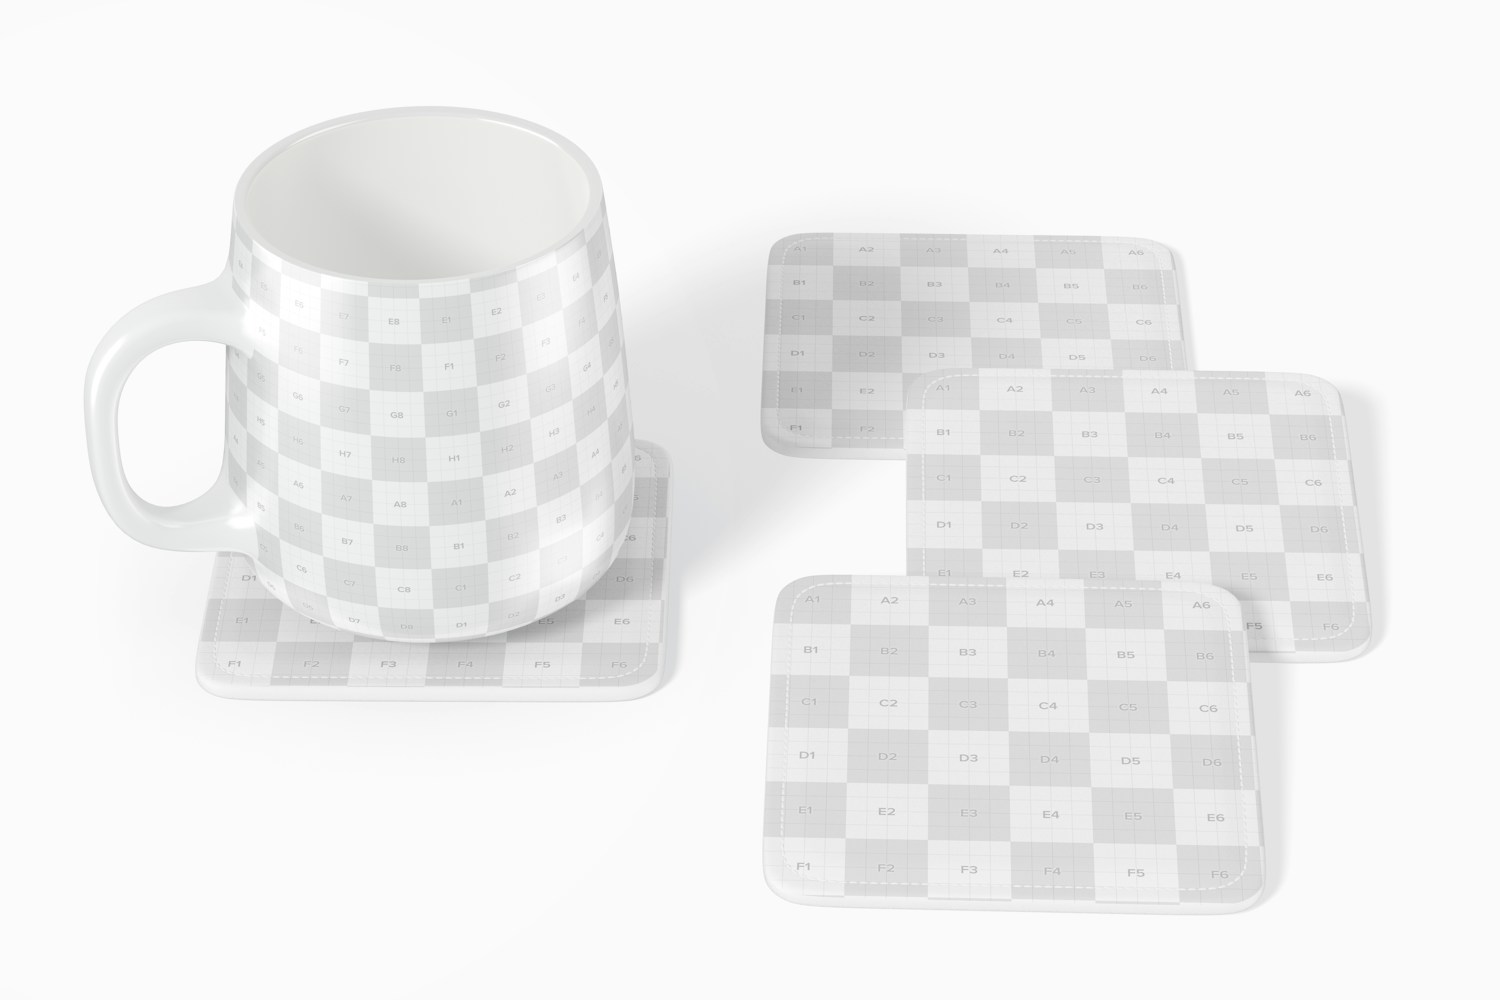 Squared Leather Coasters with Mug Mockup